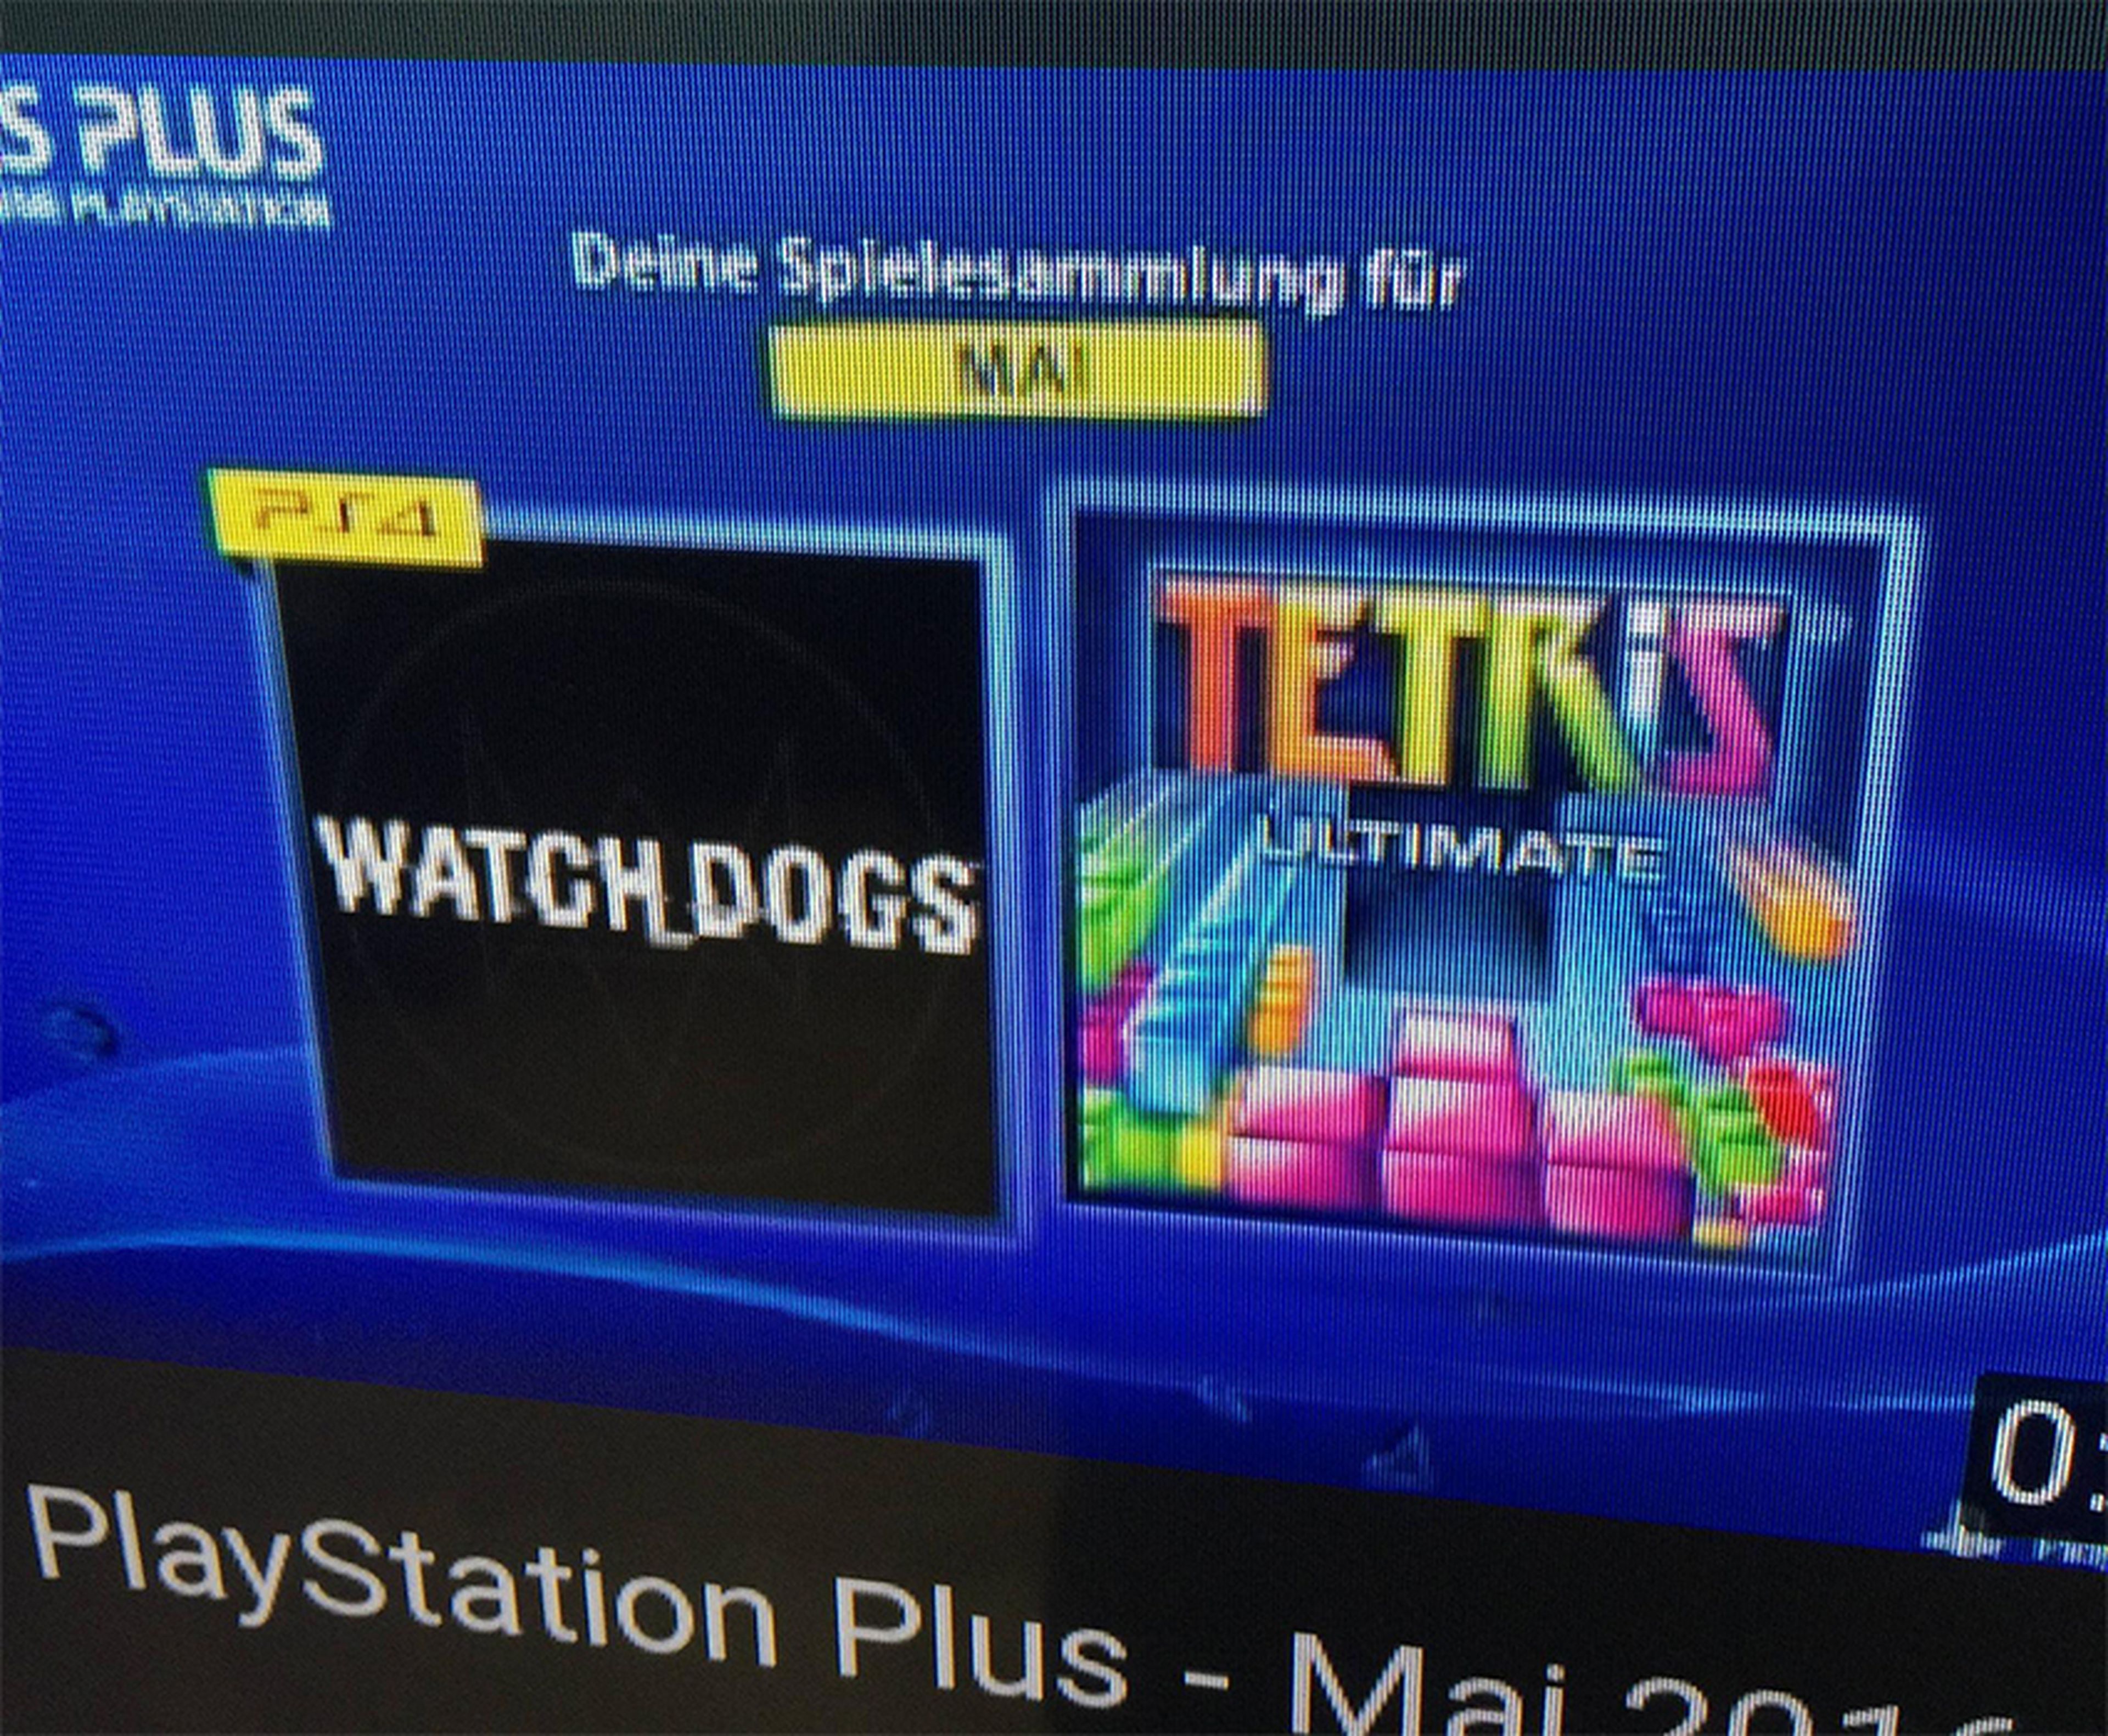 PS Plus - Watch Dogs y Tetris Ultimate para PS4 en mayo (rumor)